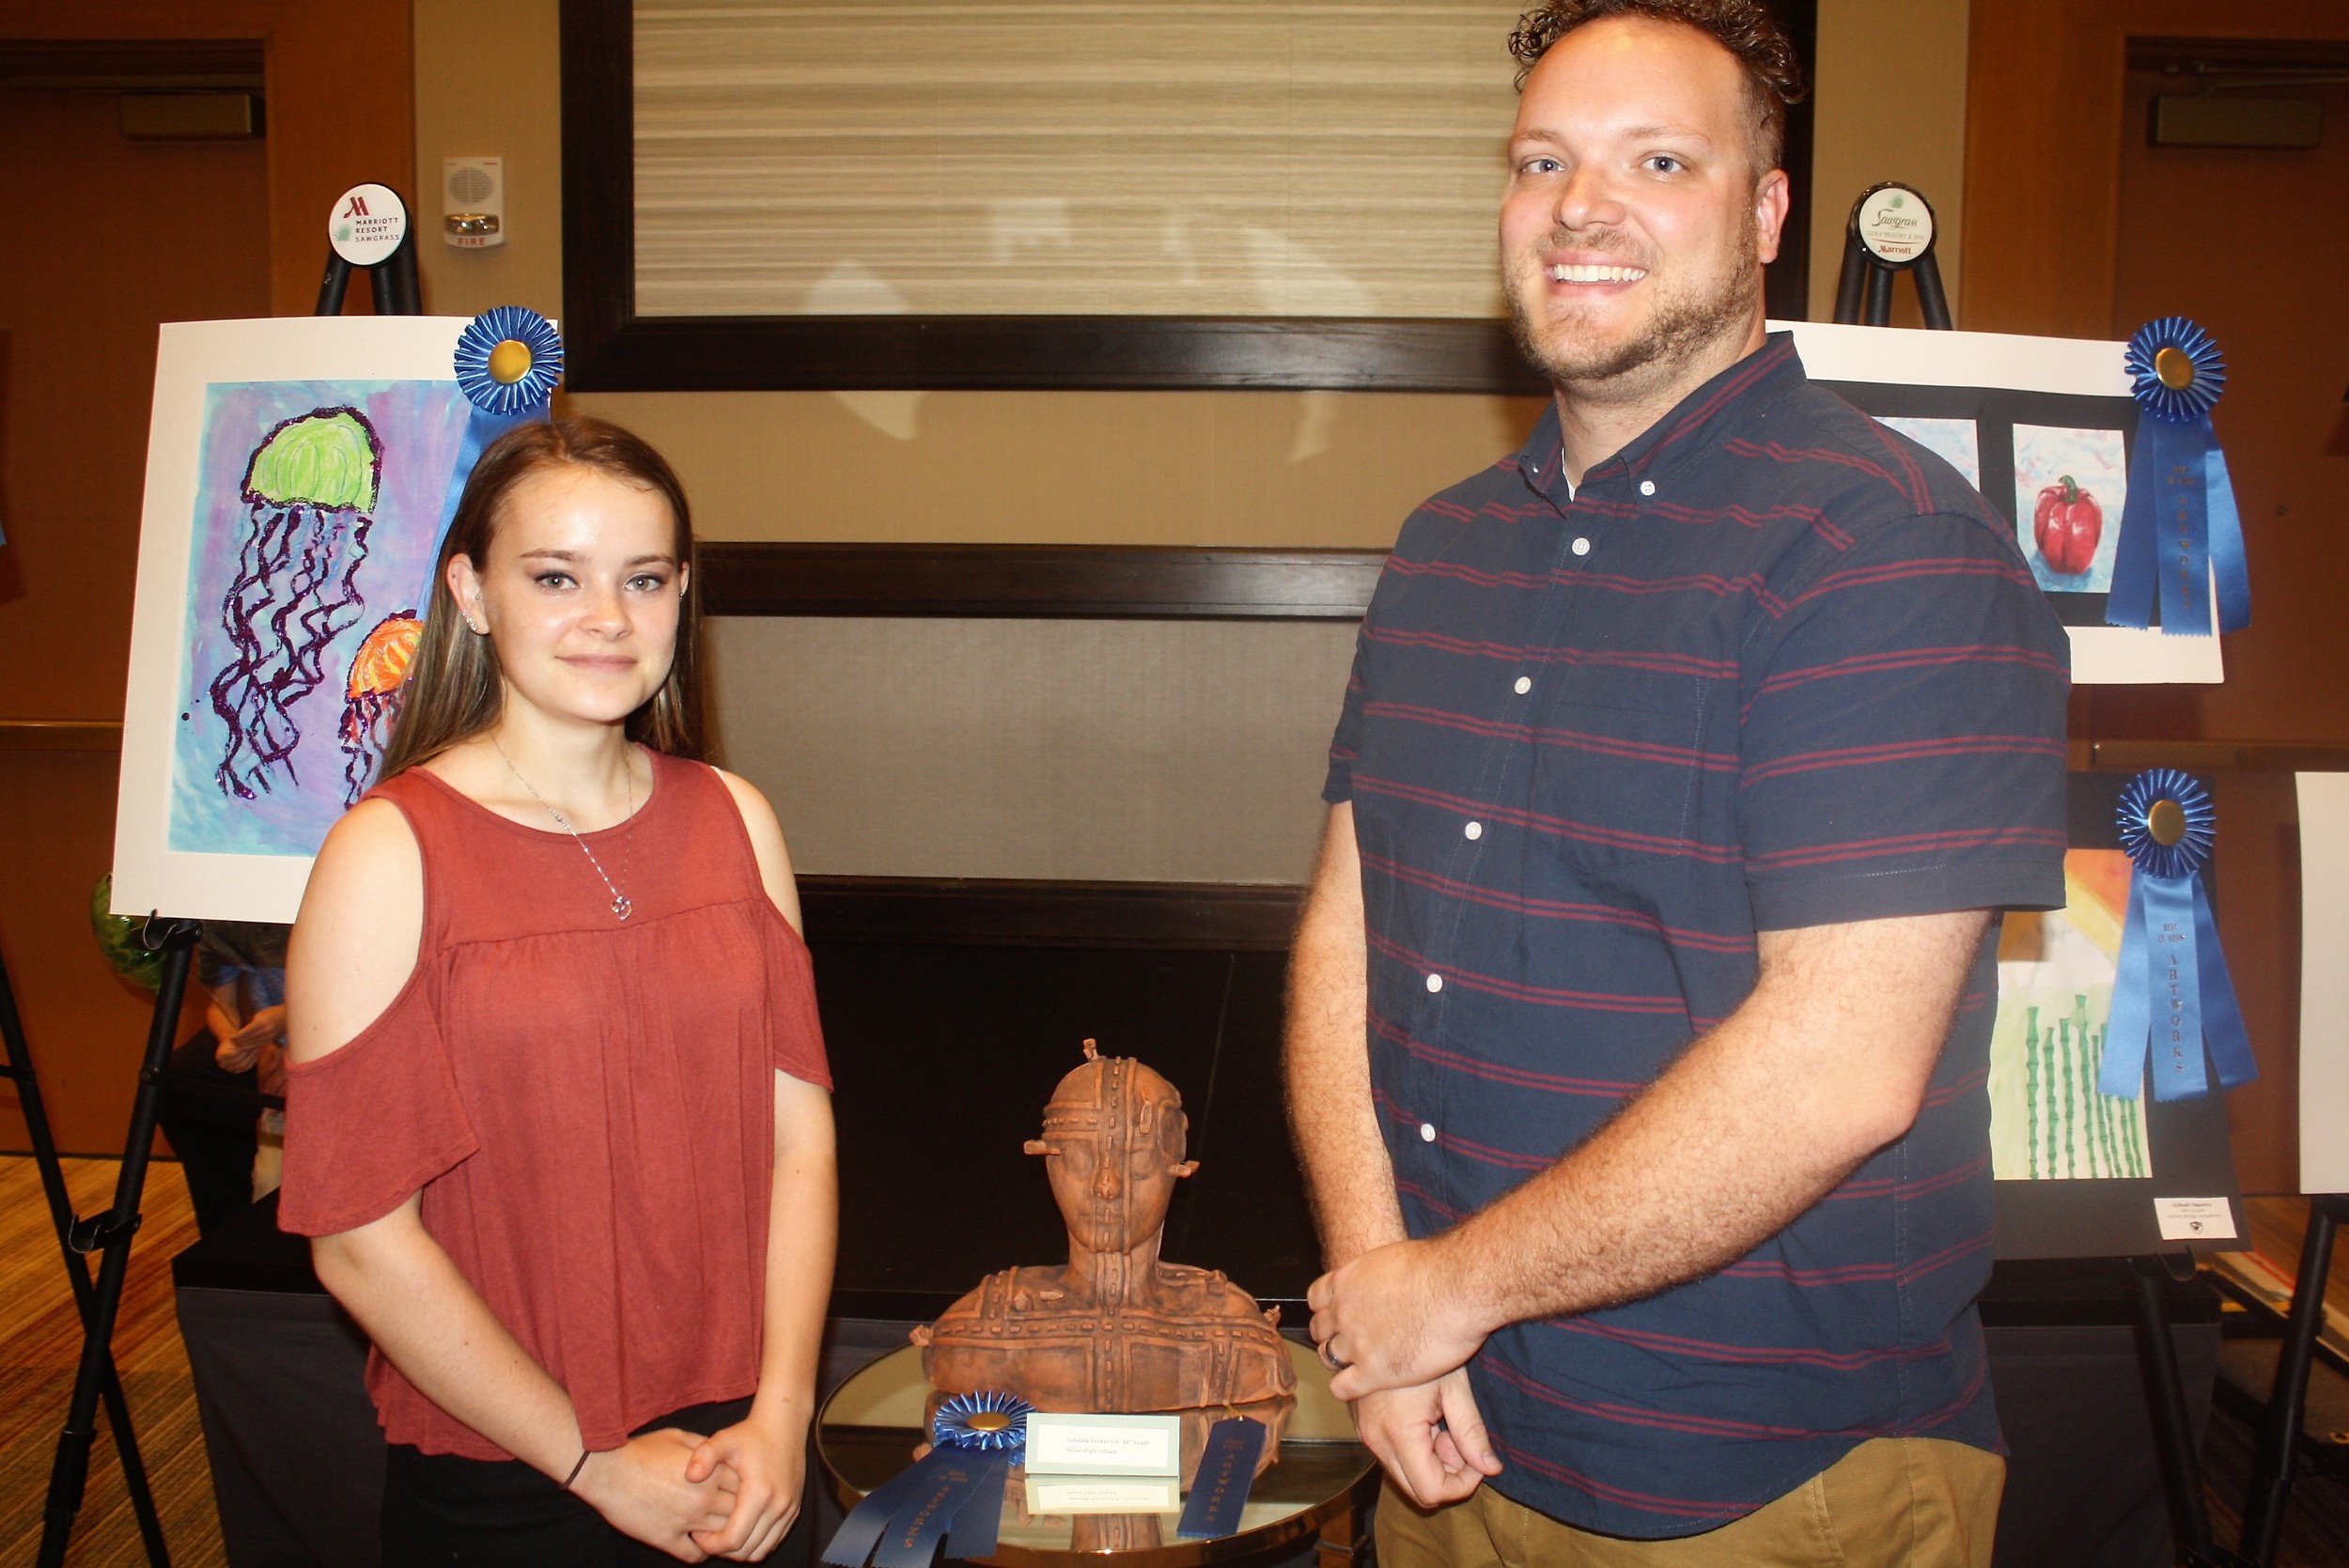 Nease High School student Amanda Yurkovich and teacher David Maynard stand with her prizewinning sculpture